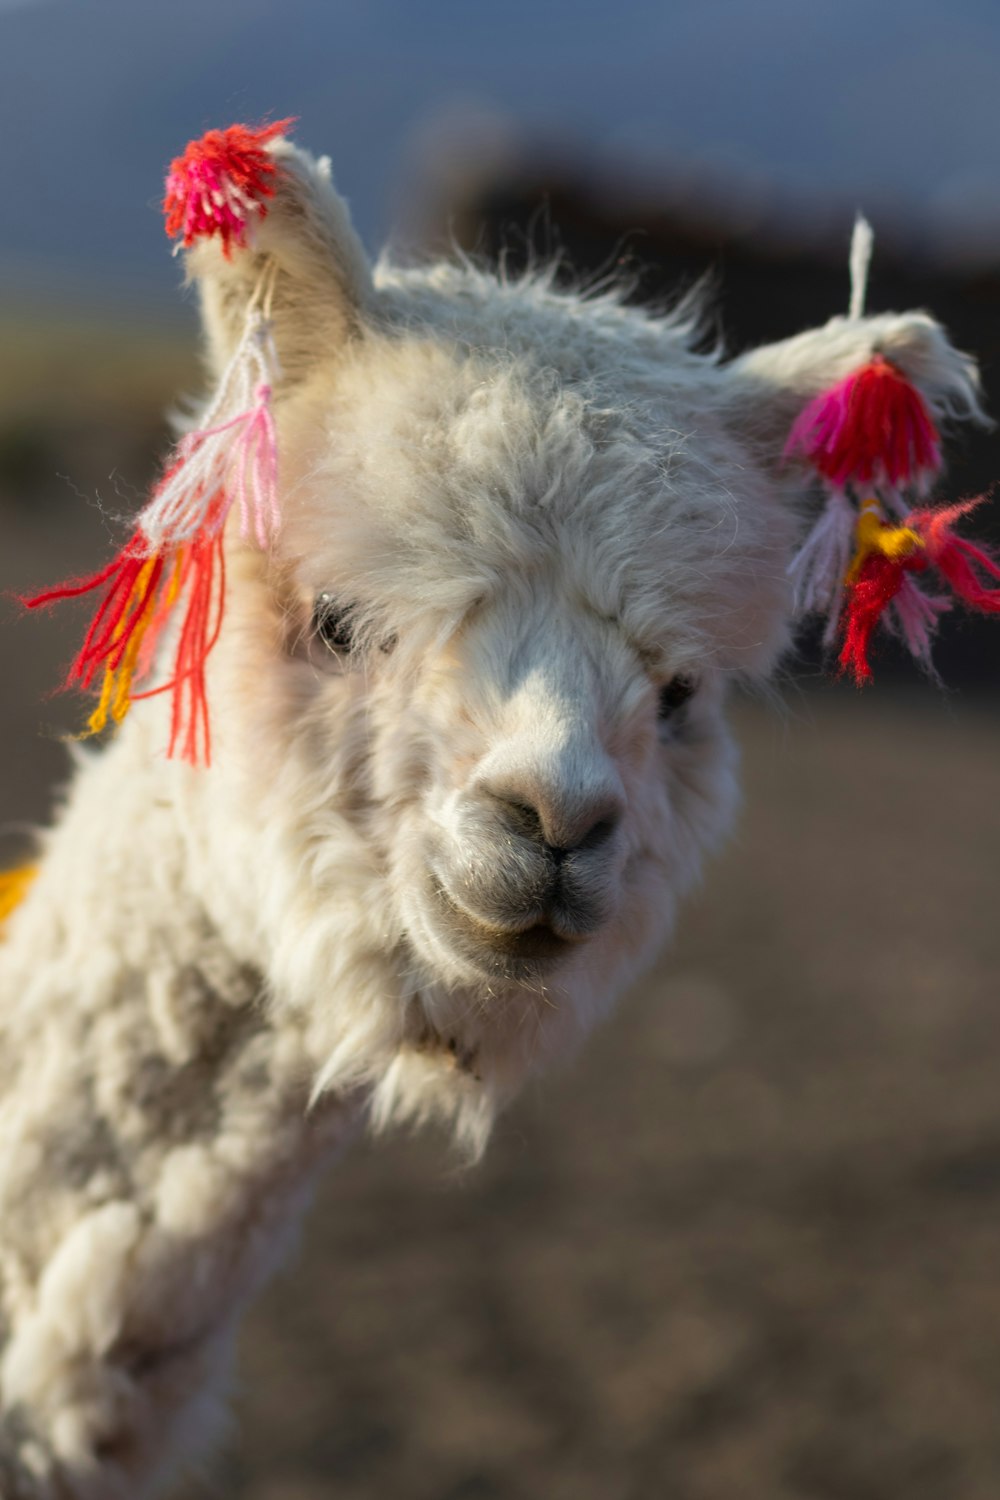 a close up of a small white llama